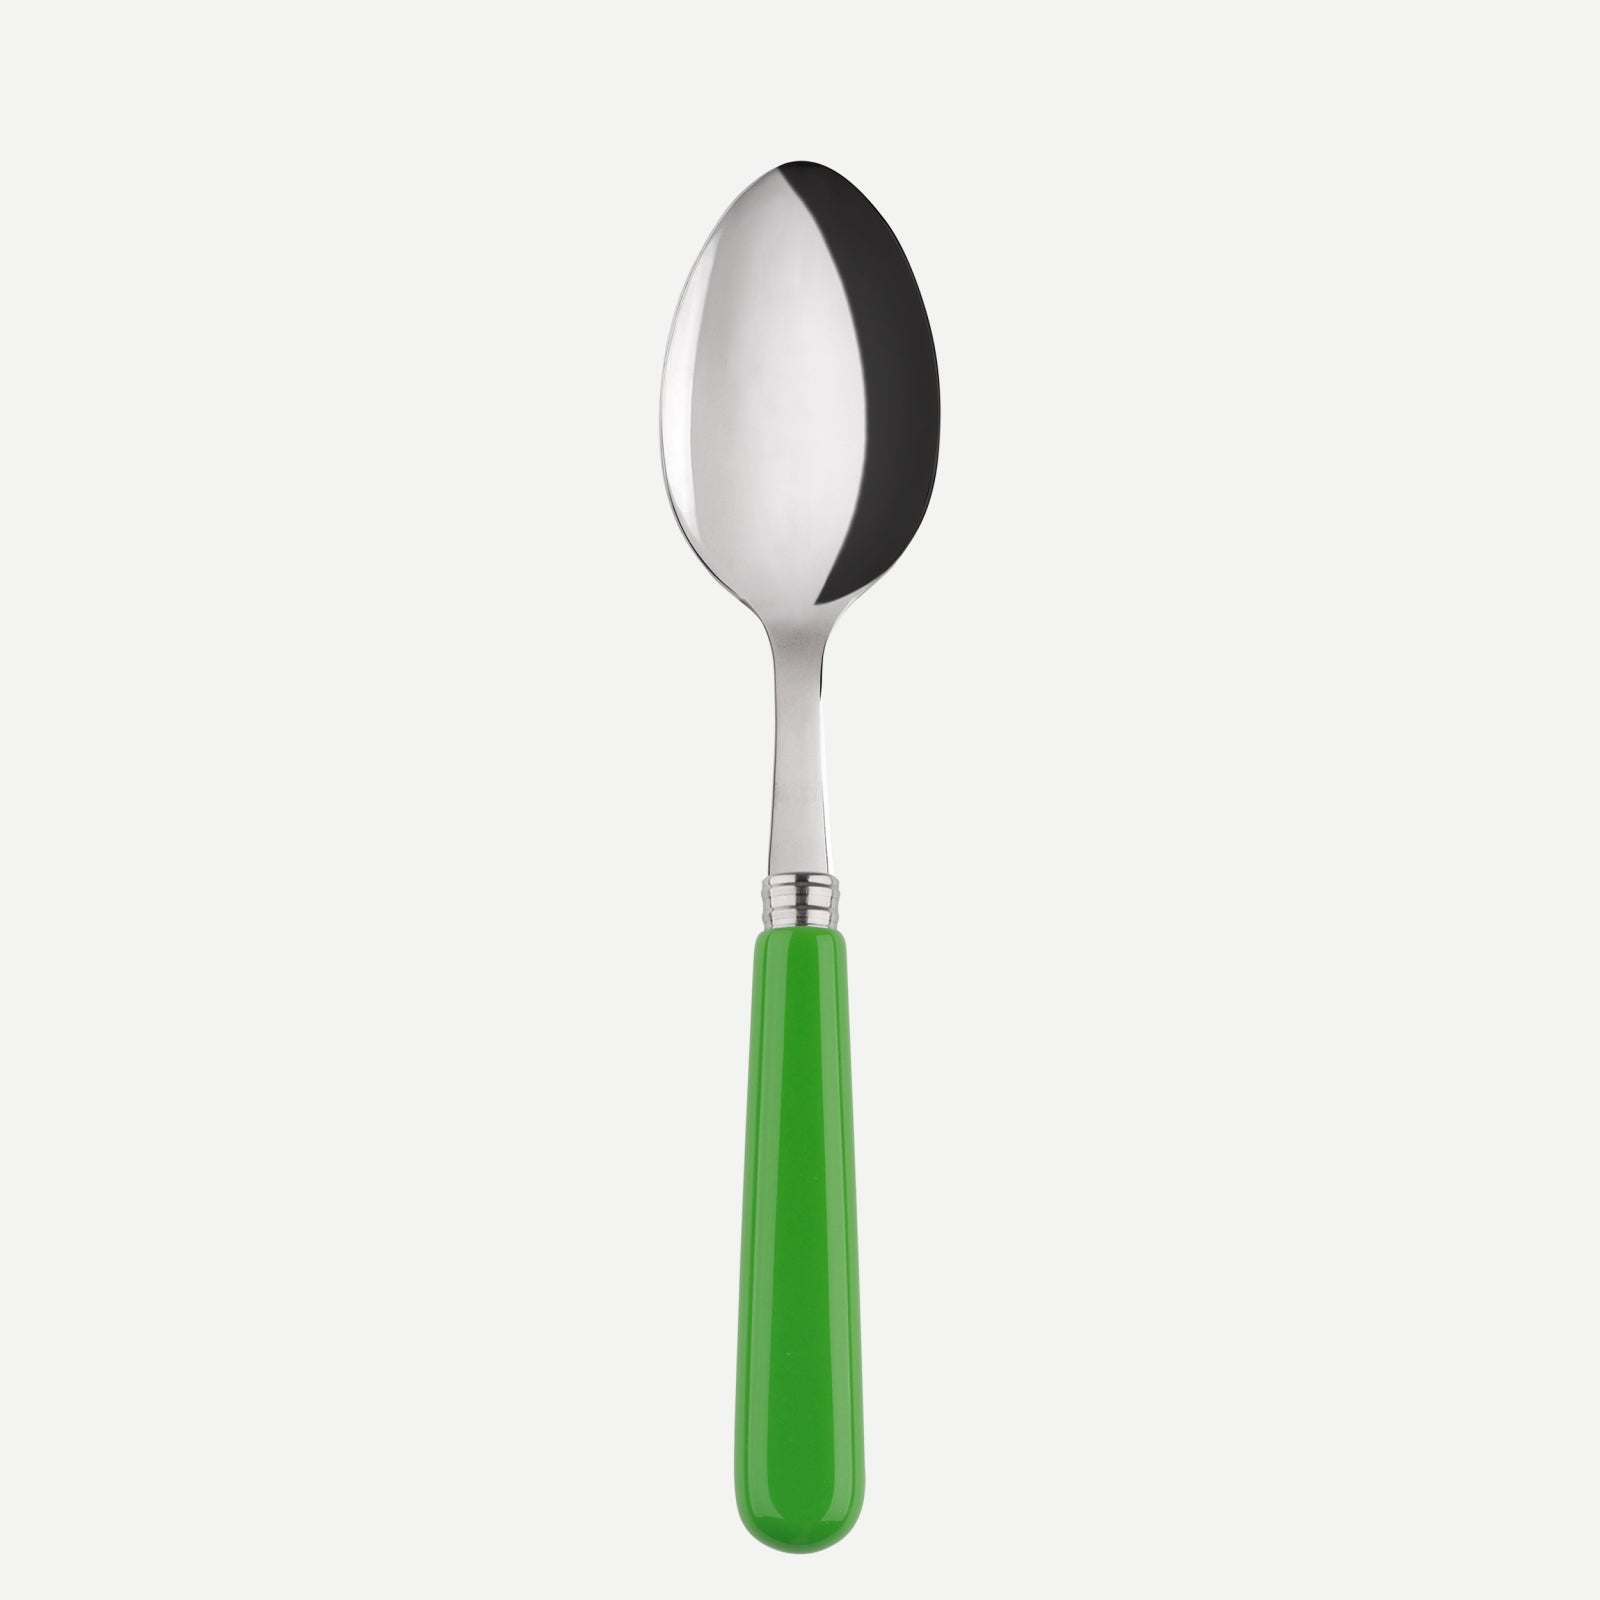 Soup spoon - Pop unis - Streaming green